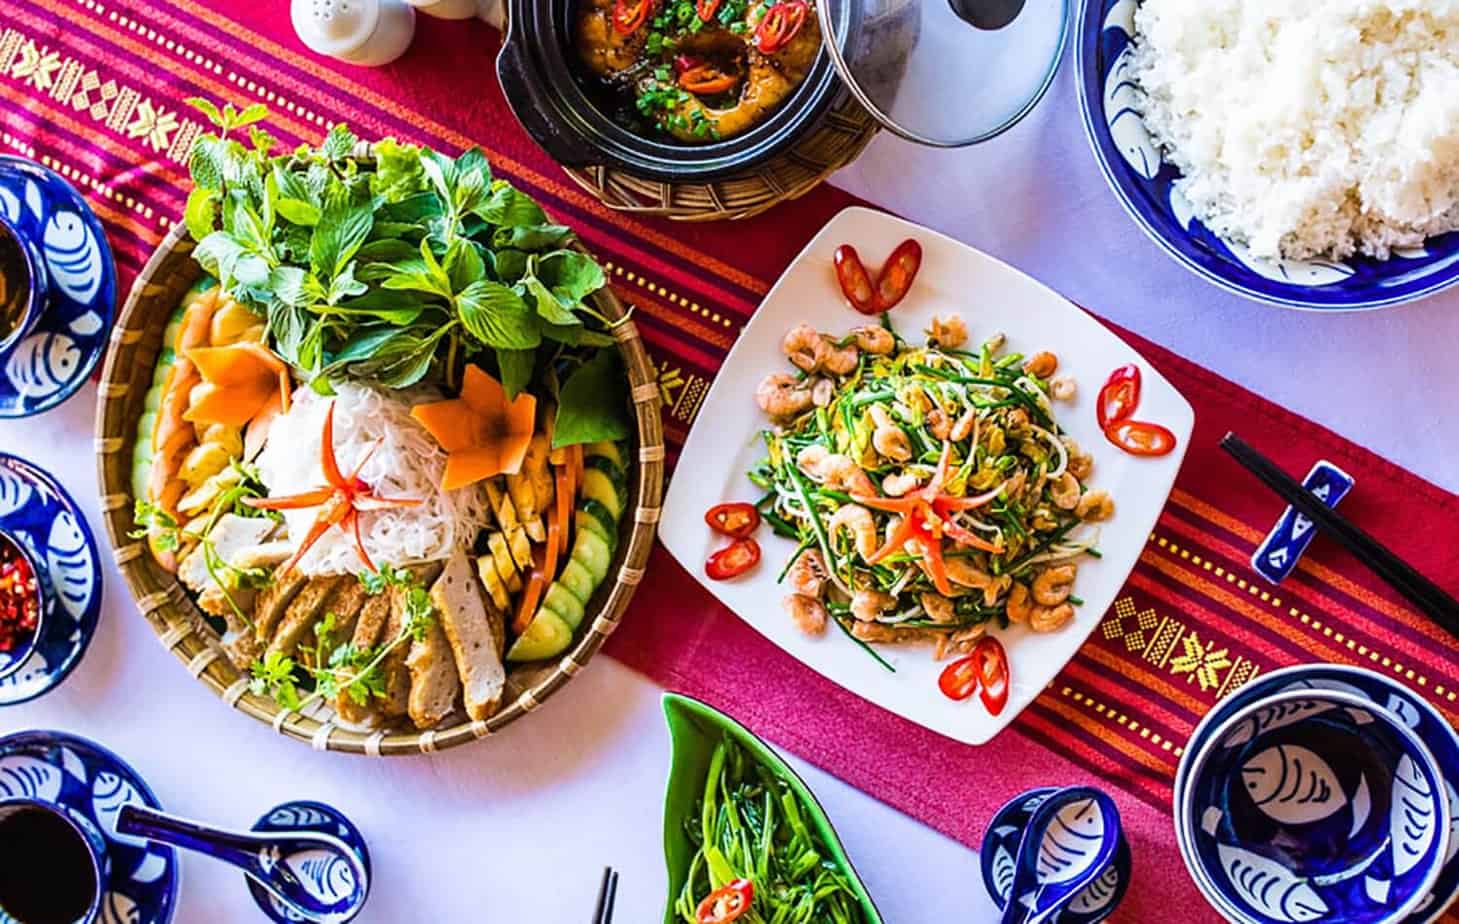 Reasons to Visit Vietnam - Delicious Food